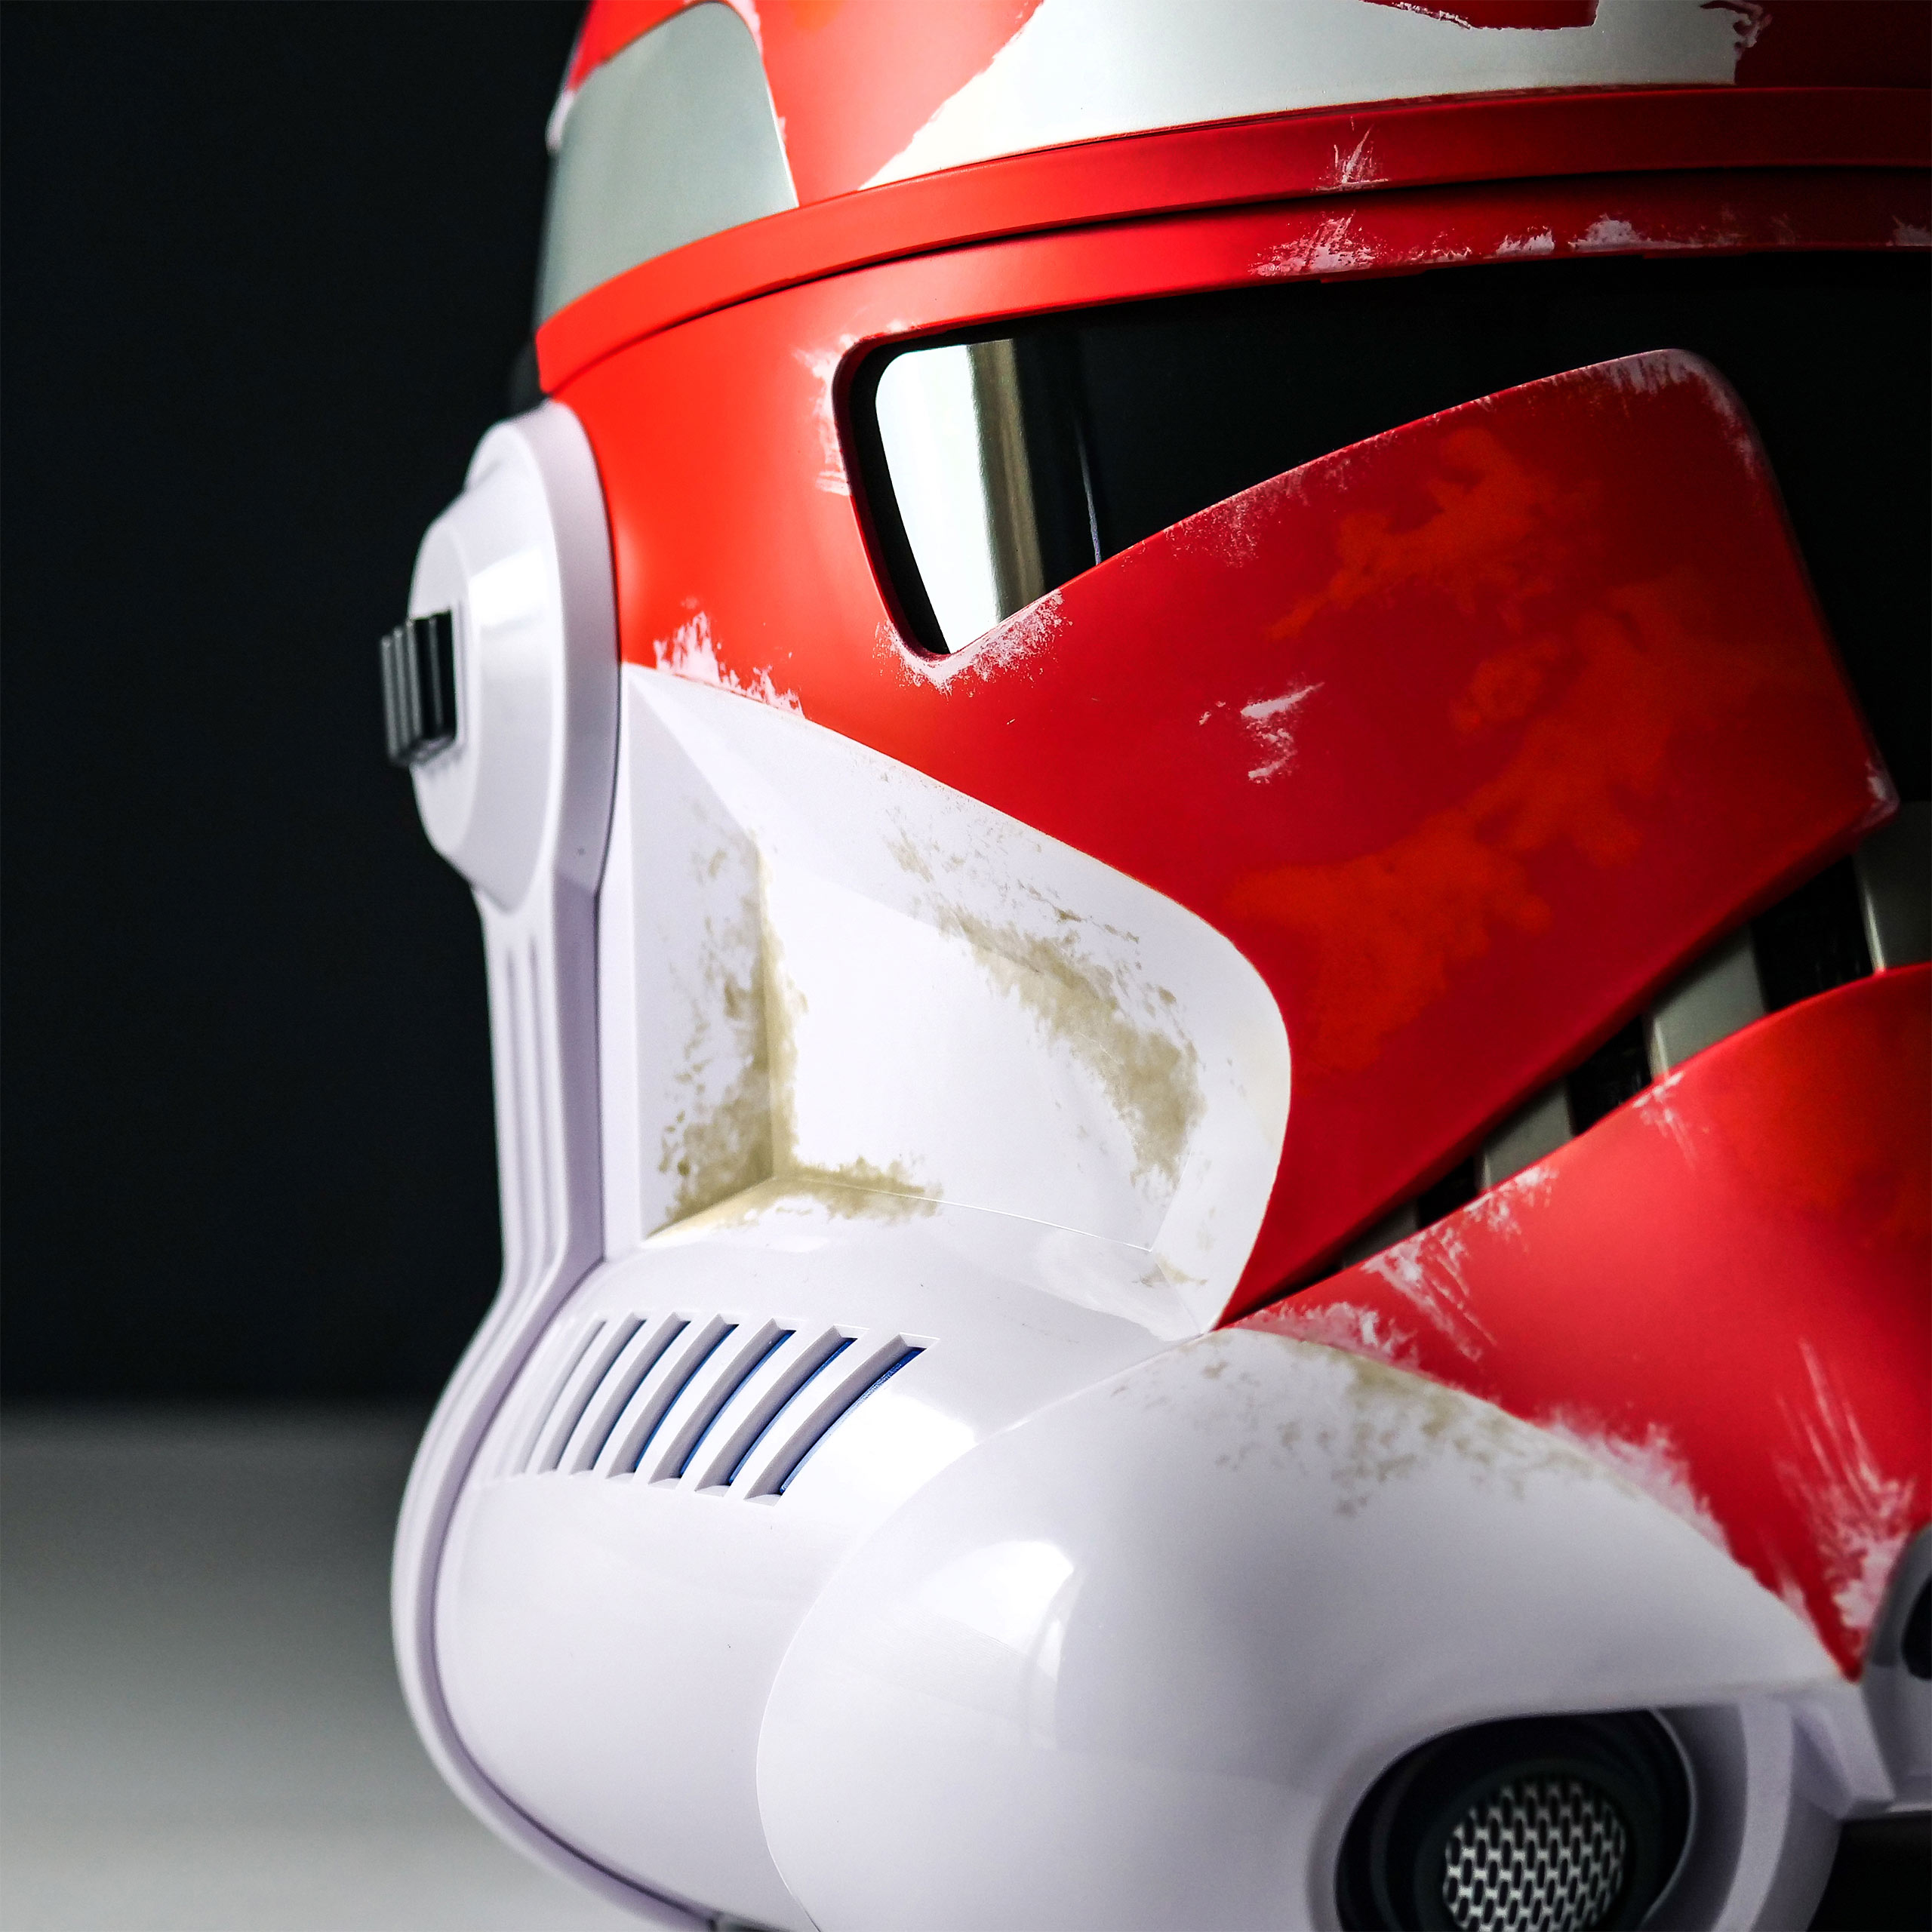 Ahsoka Tano 332nd Clone Trooper Premium Helmet Replica with Voice Distorter - Star Wars